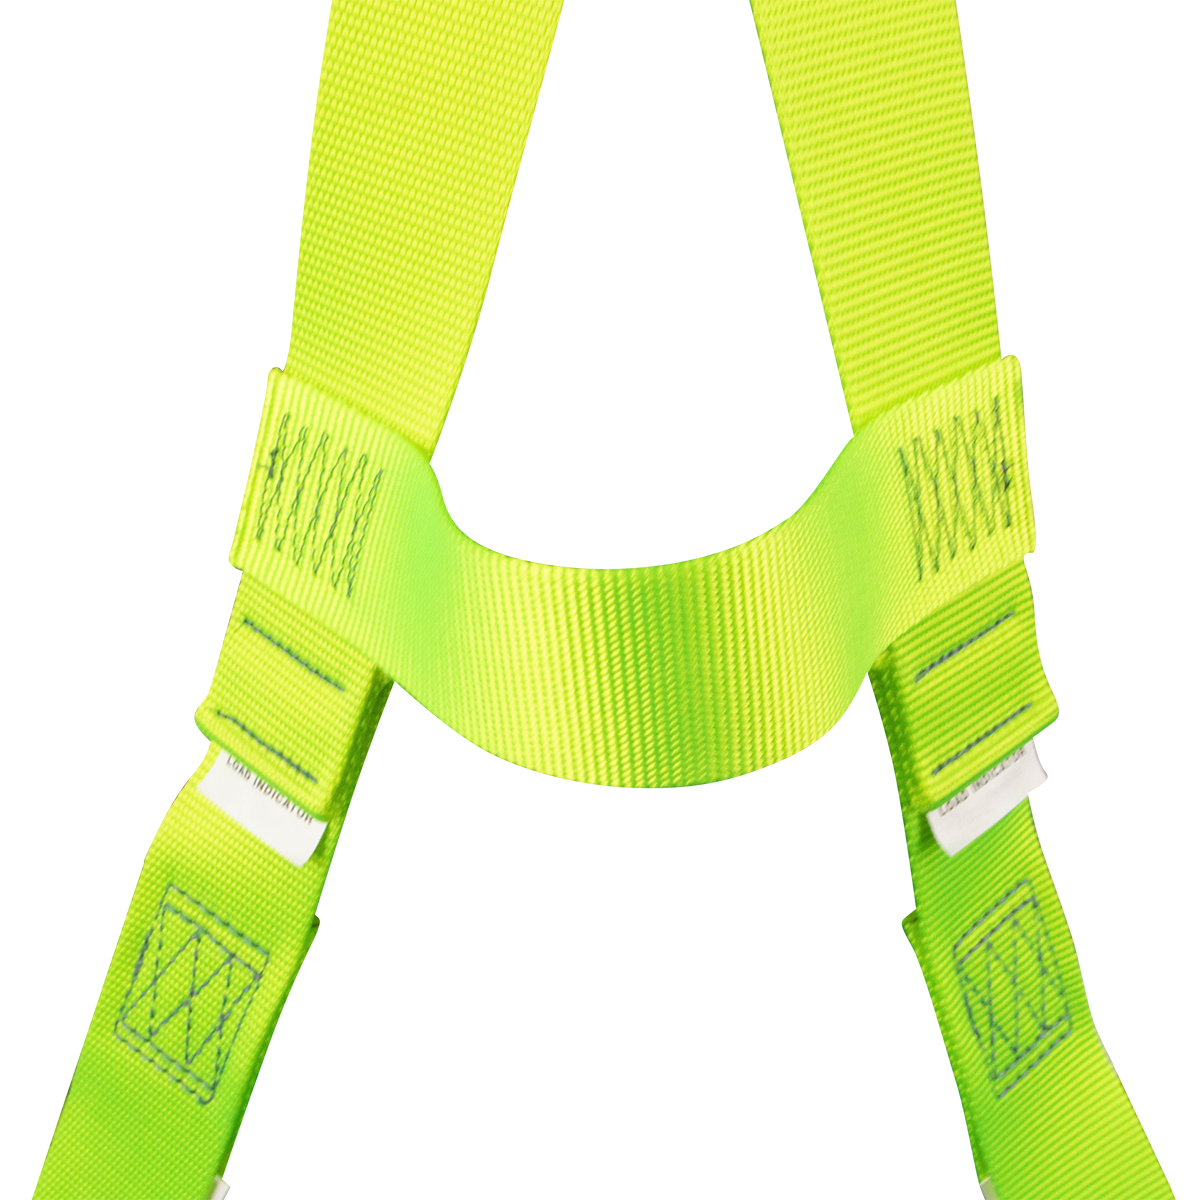 Safewaze Arc Flash Full Body Nylon Harness from Columbia Safety